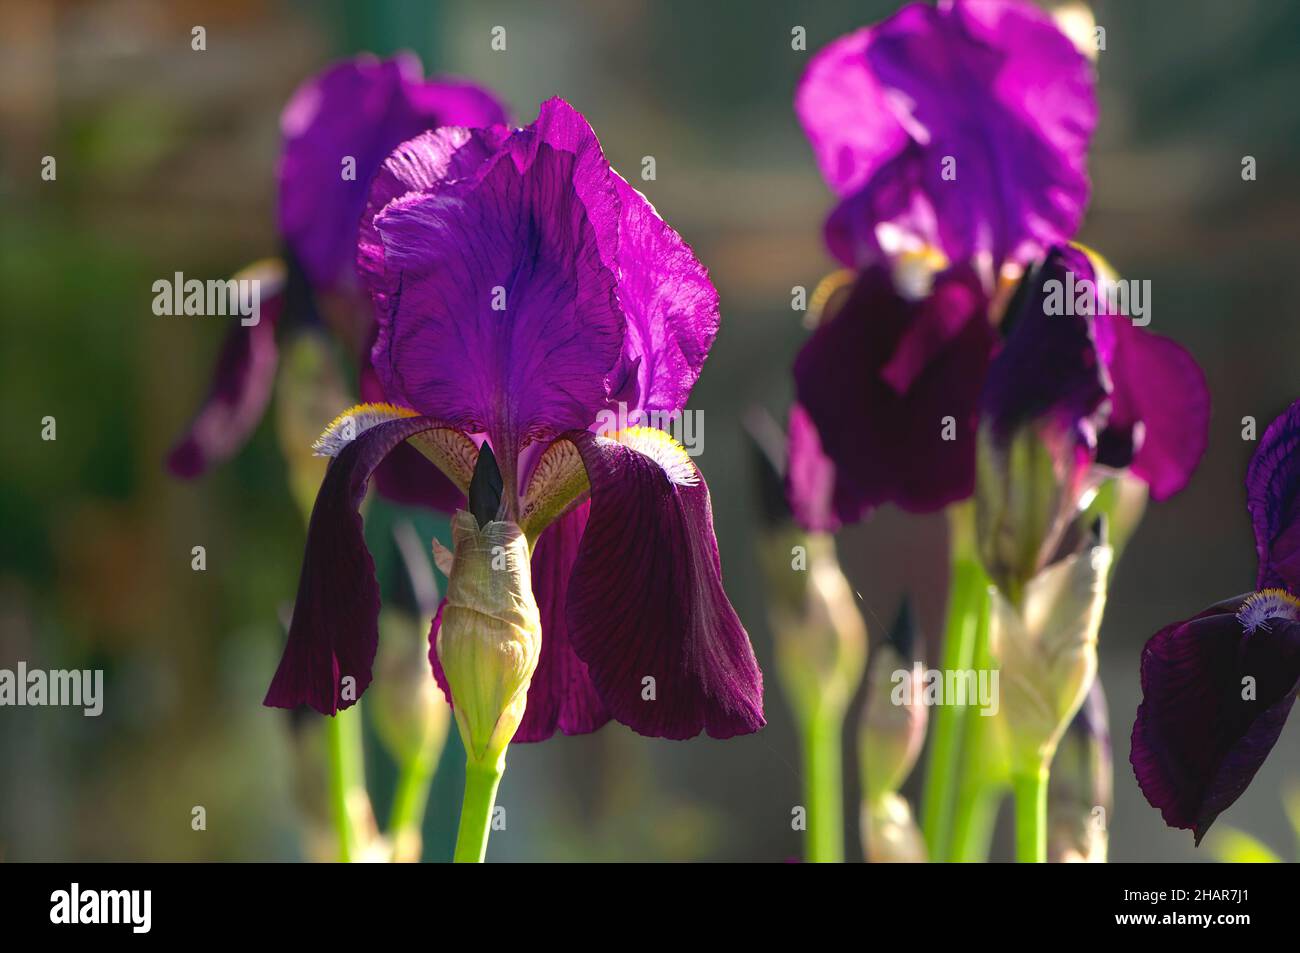 Bearded purple Iris (Iris x germanica) in a garden setting. Stock Photo